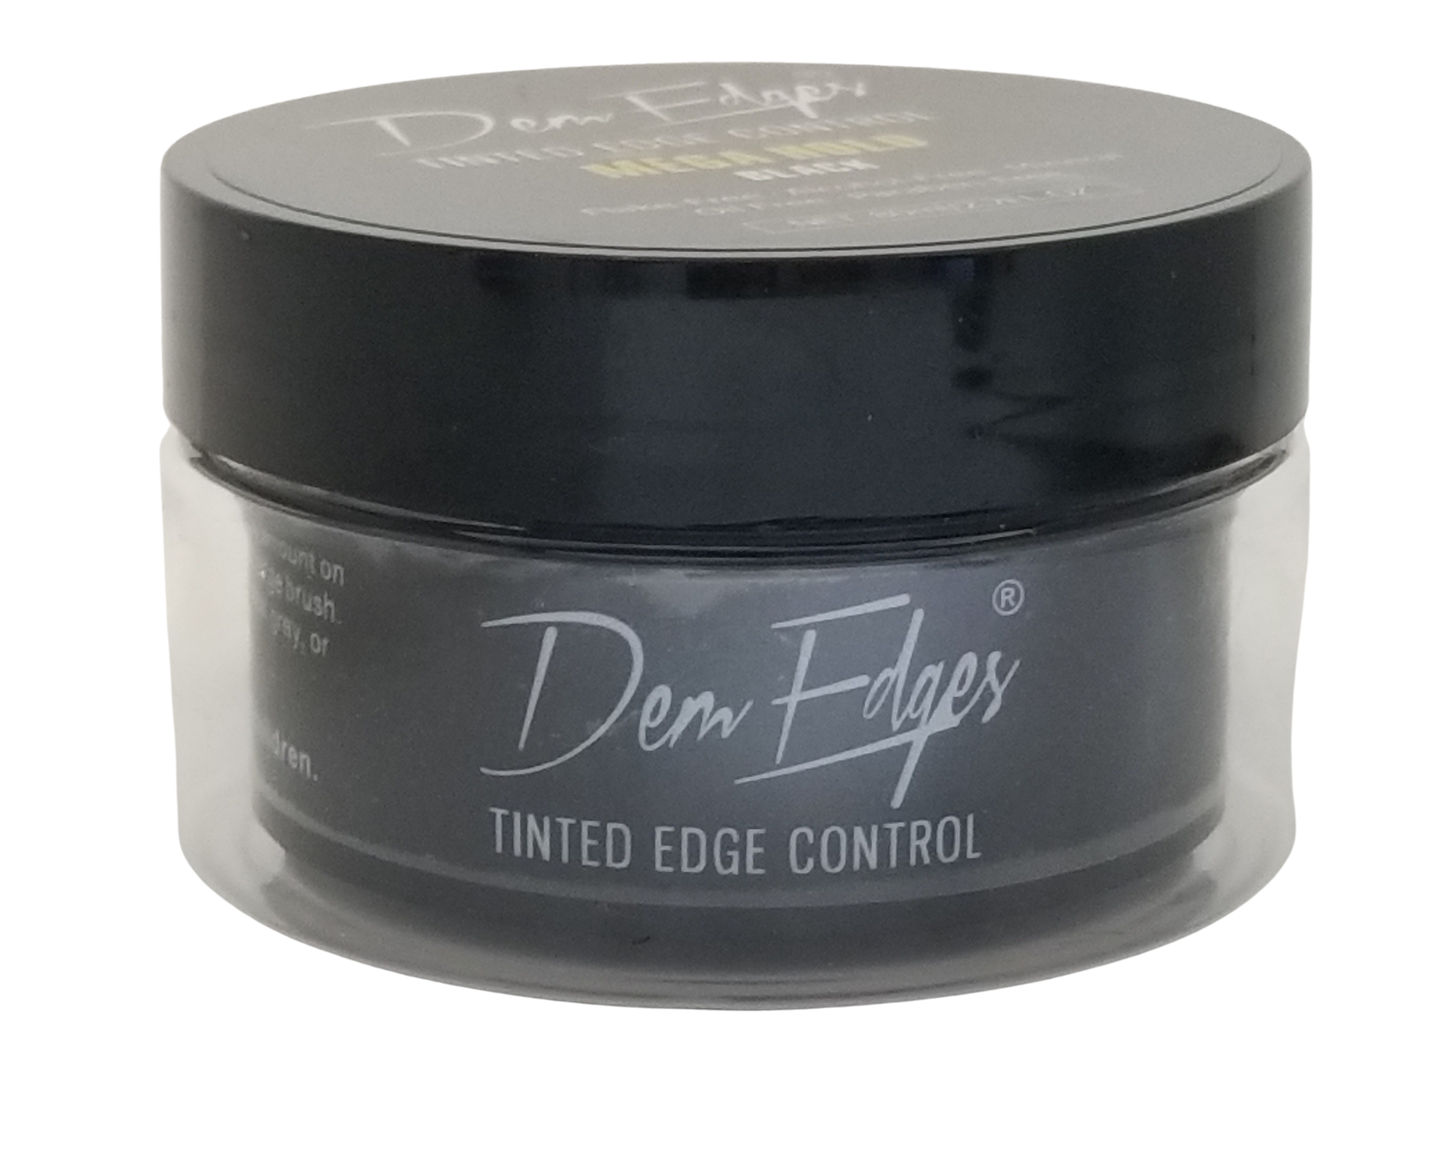 Dem Edges® Tinted Edge Control - MEGA HOLD  2.72 oz